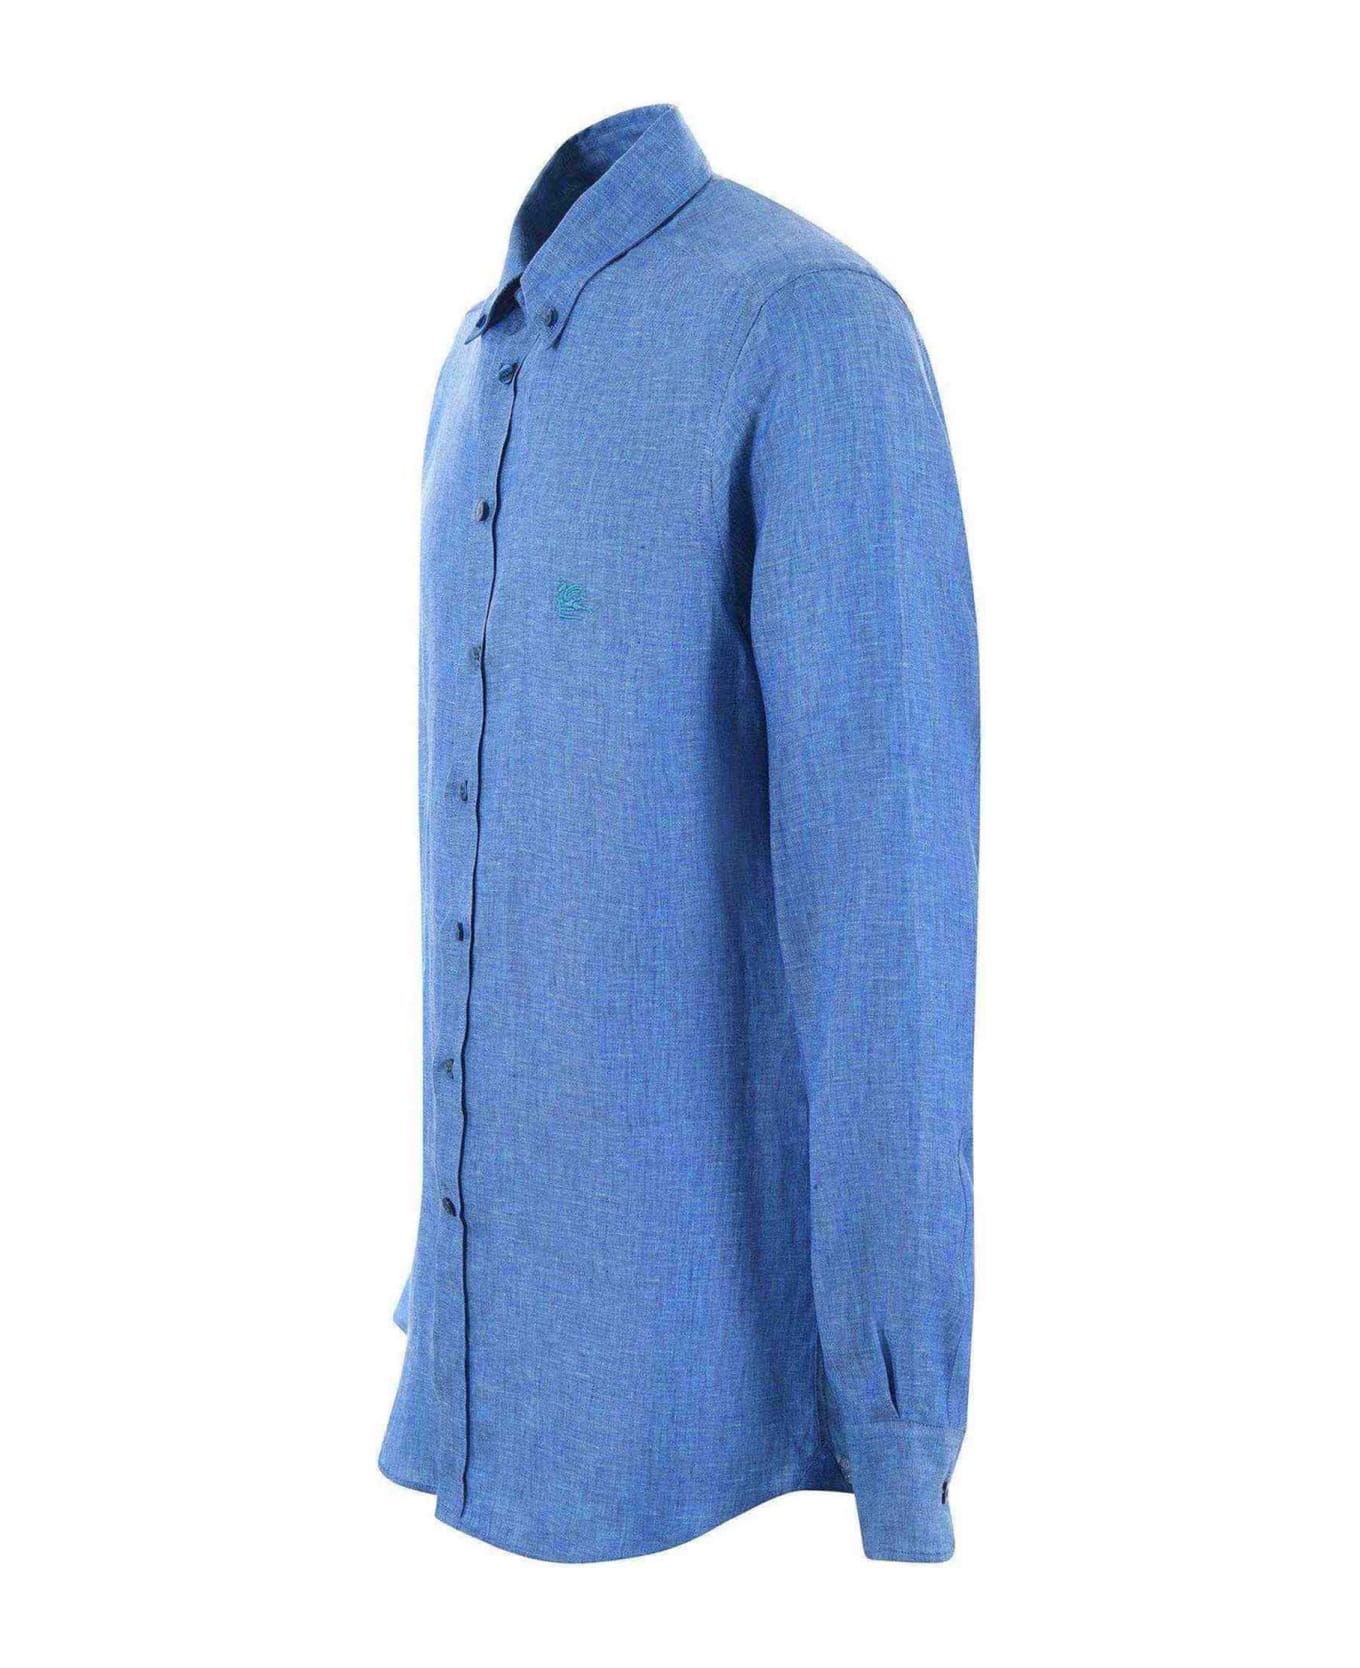 Etro Buttoned Long-sleeved Shirt - Azzurro シャツ